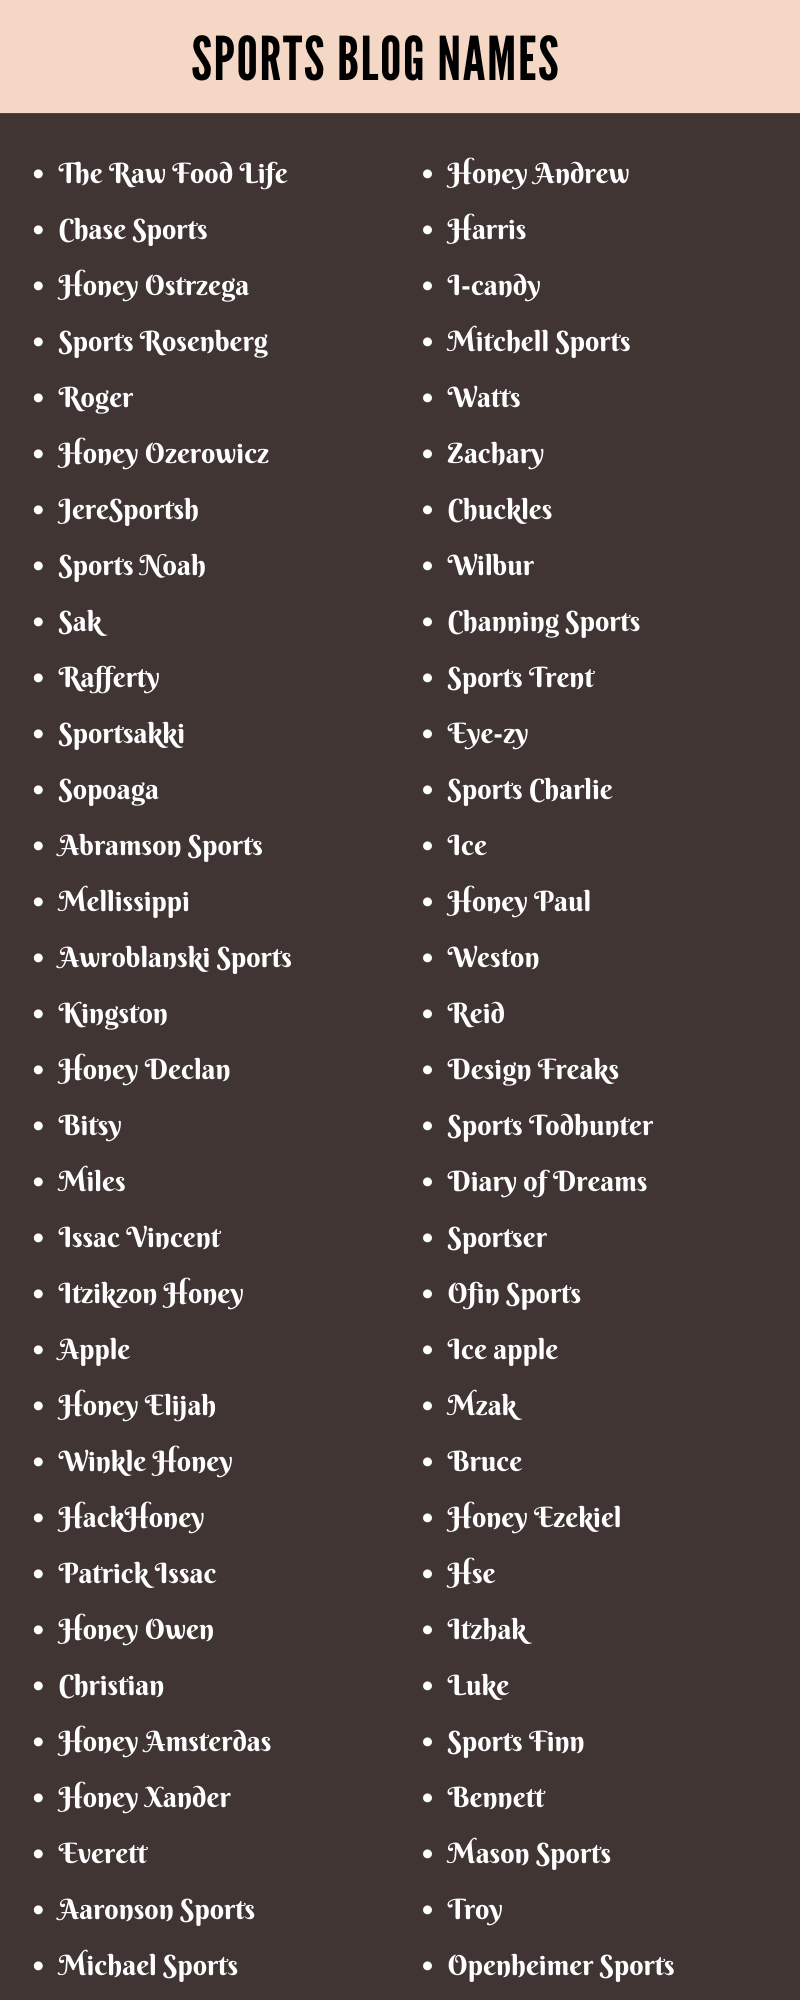 Sports Blog Names